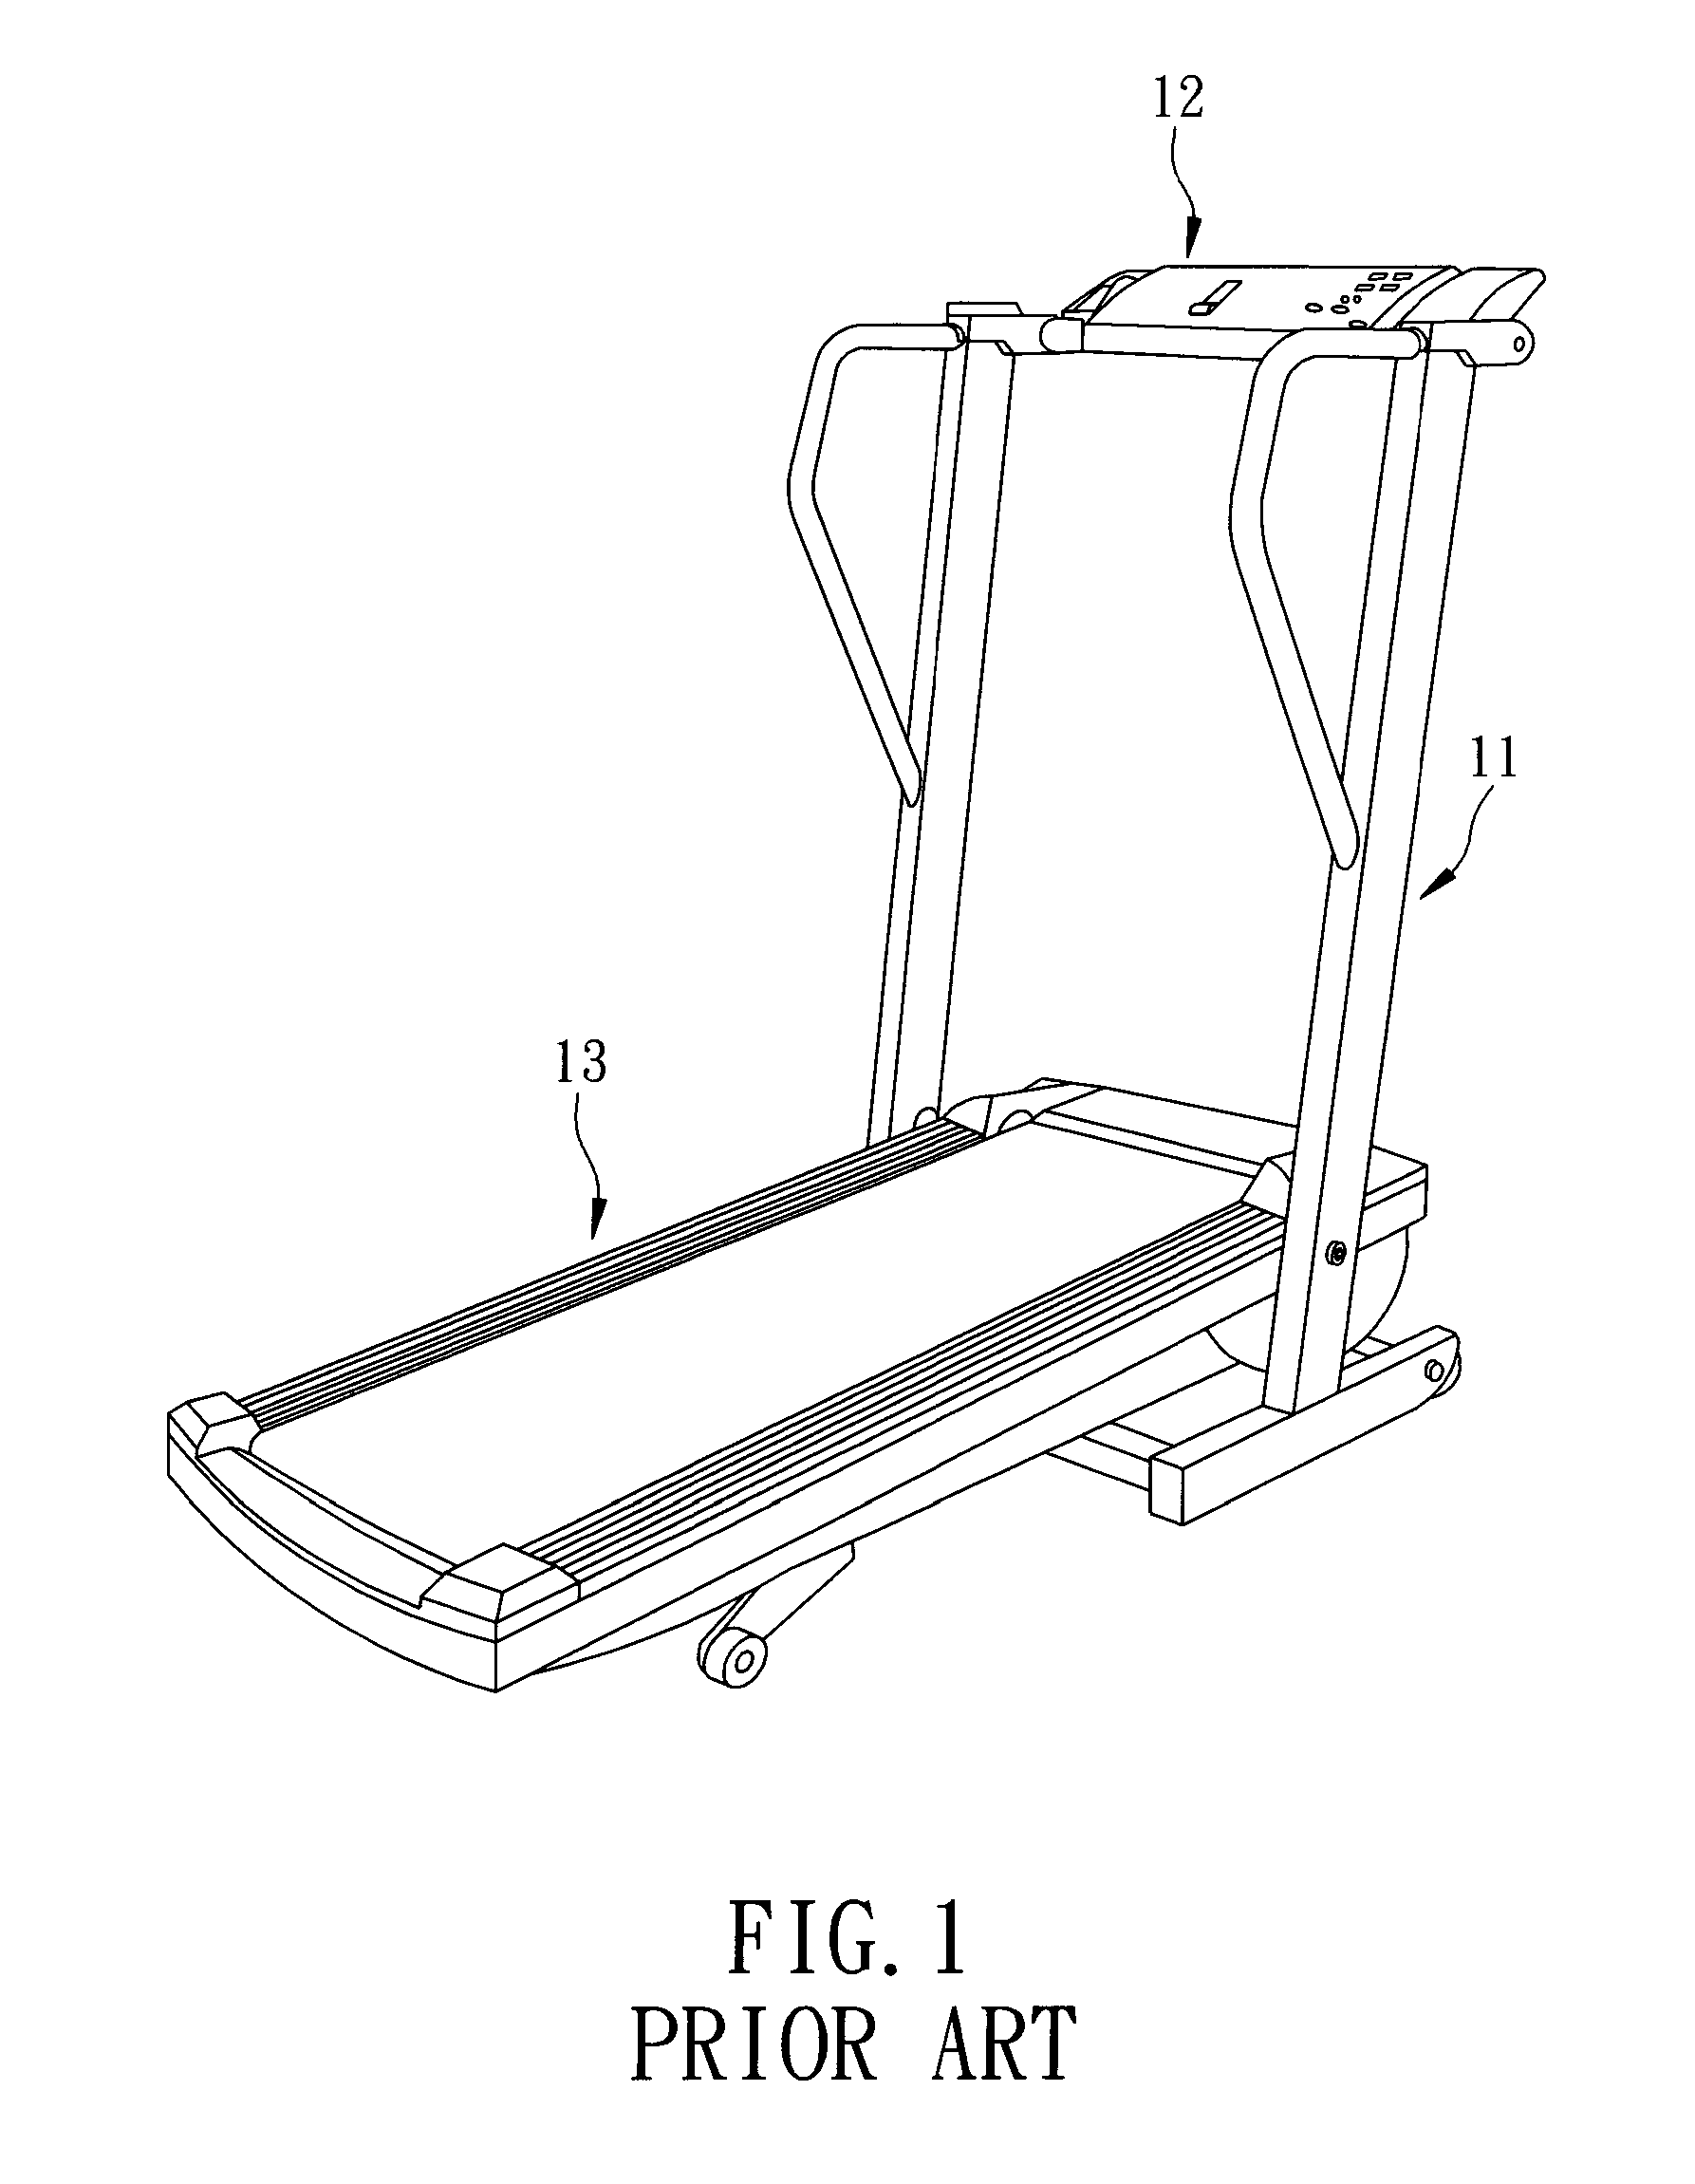 Dual-purpose foldable treadmill